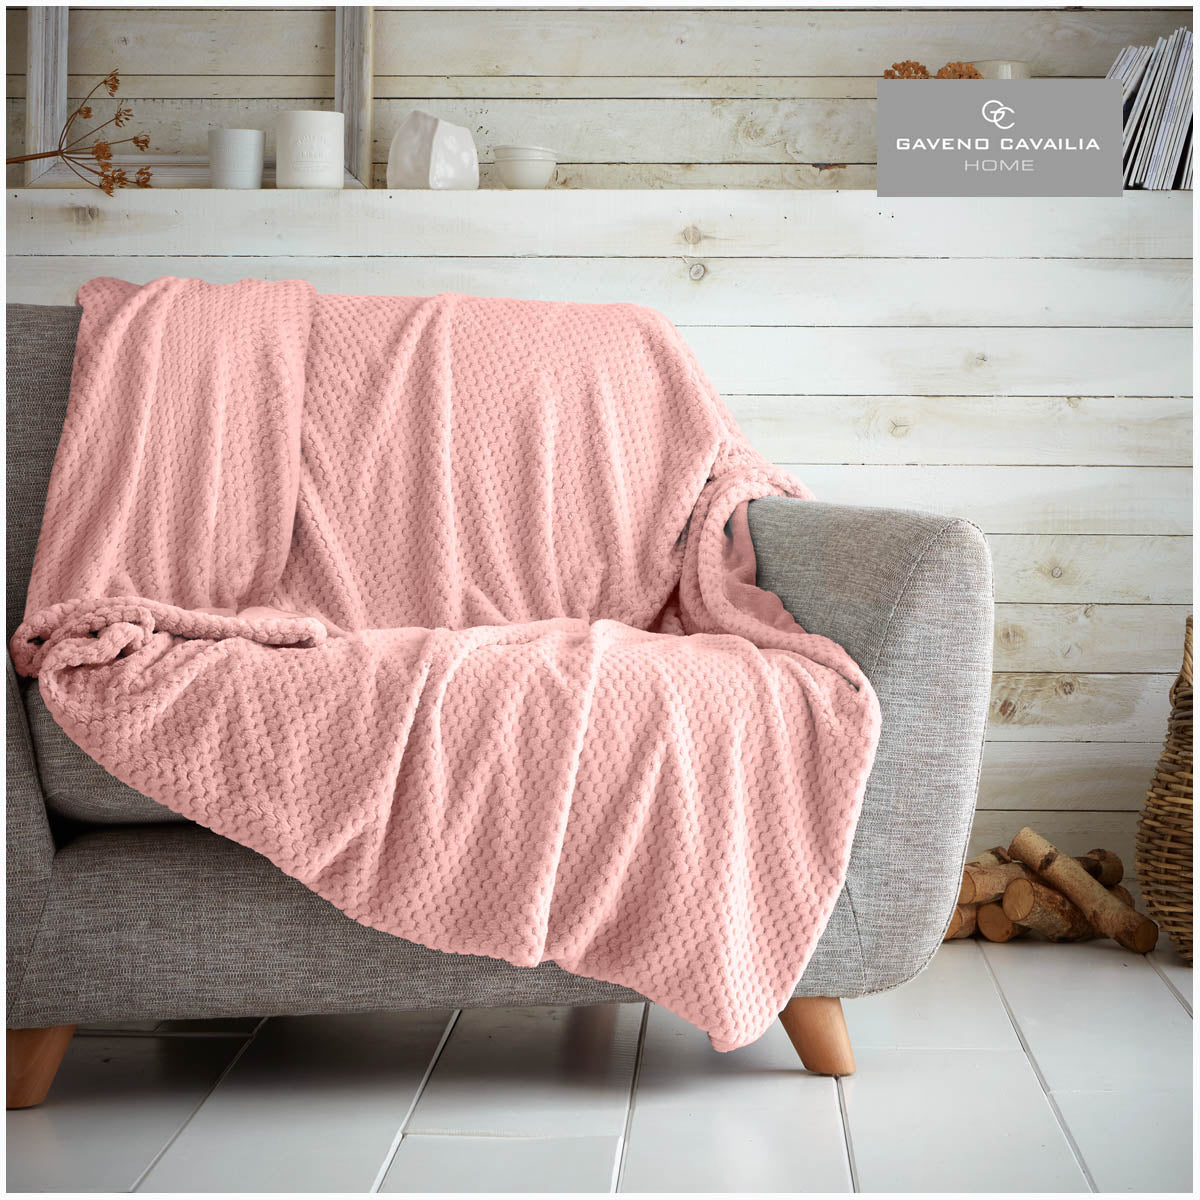 GC GAVENO CAVAILIA Soft Throw, Fluffy Blankets For Sofas OR